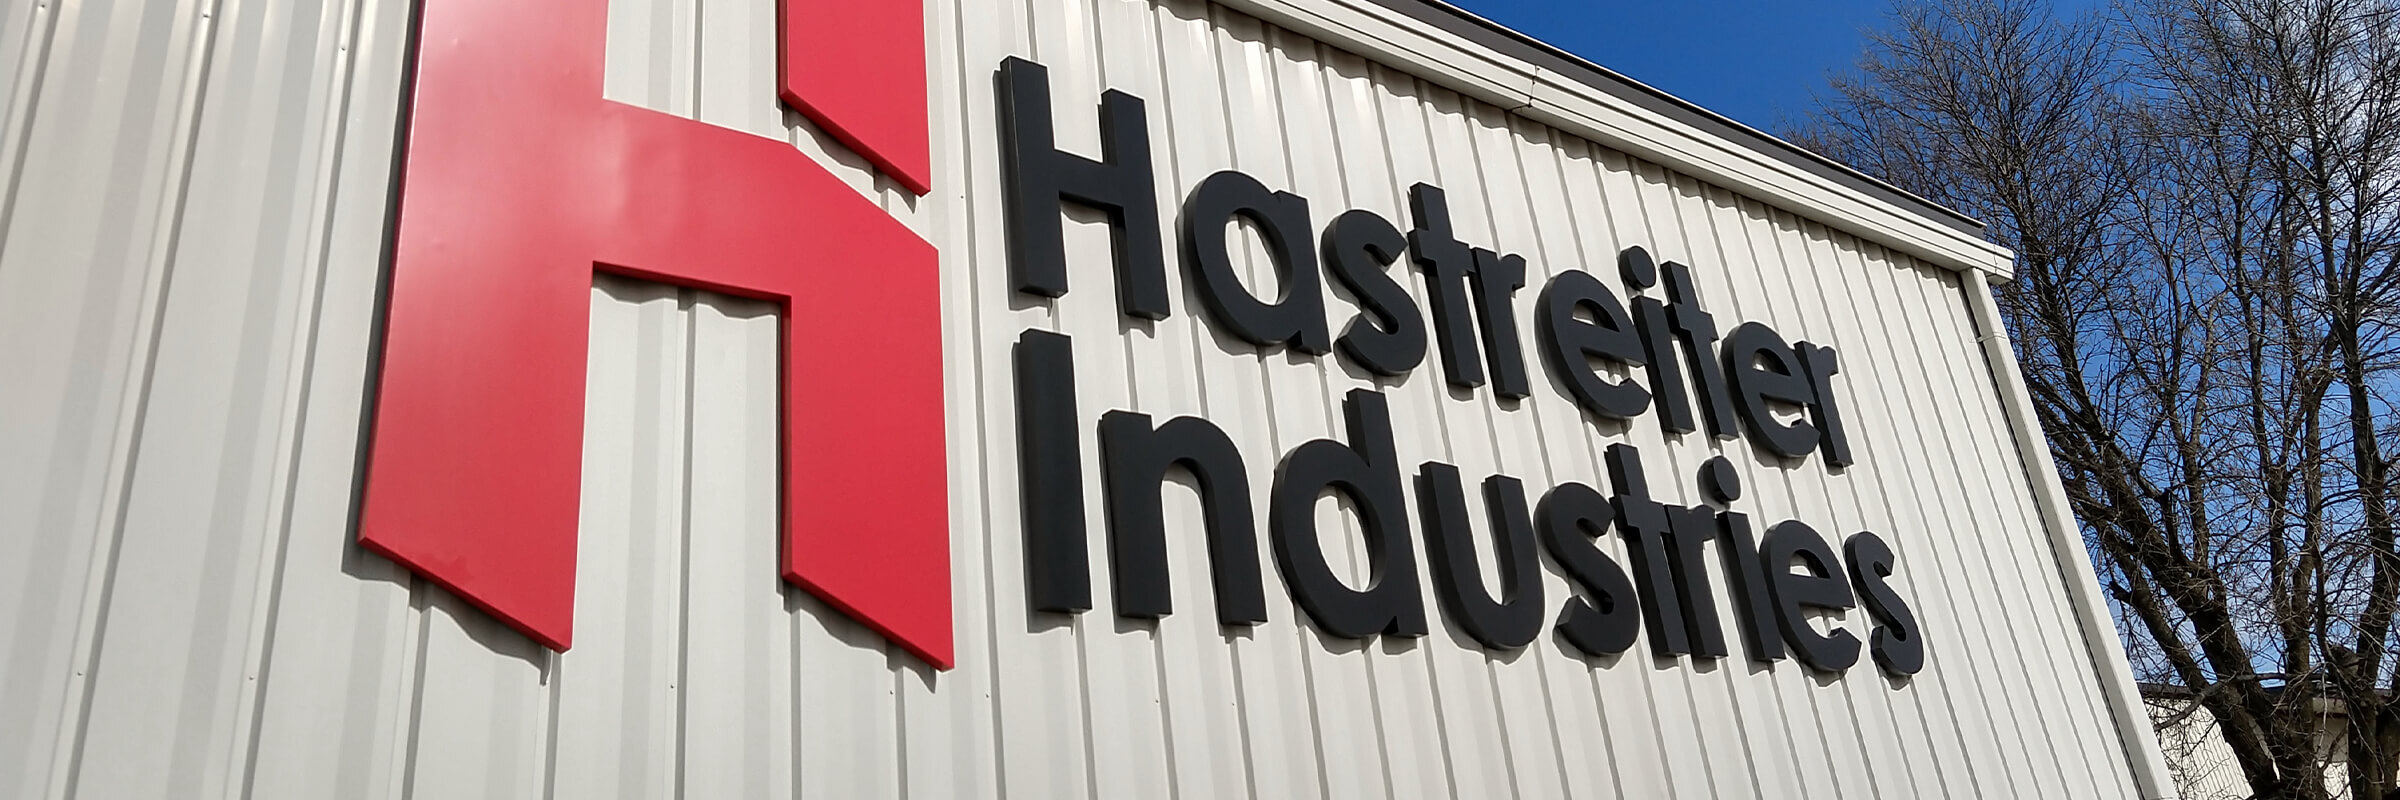 Hastreiter Industries: Purpose Driven Manufacturing